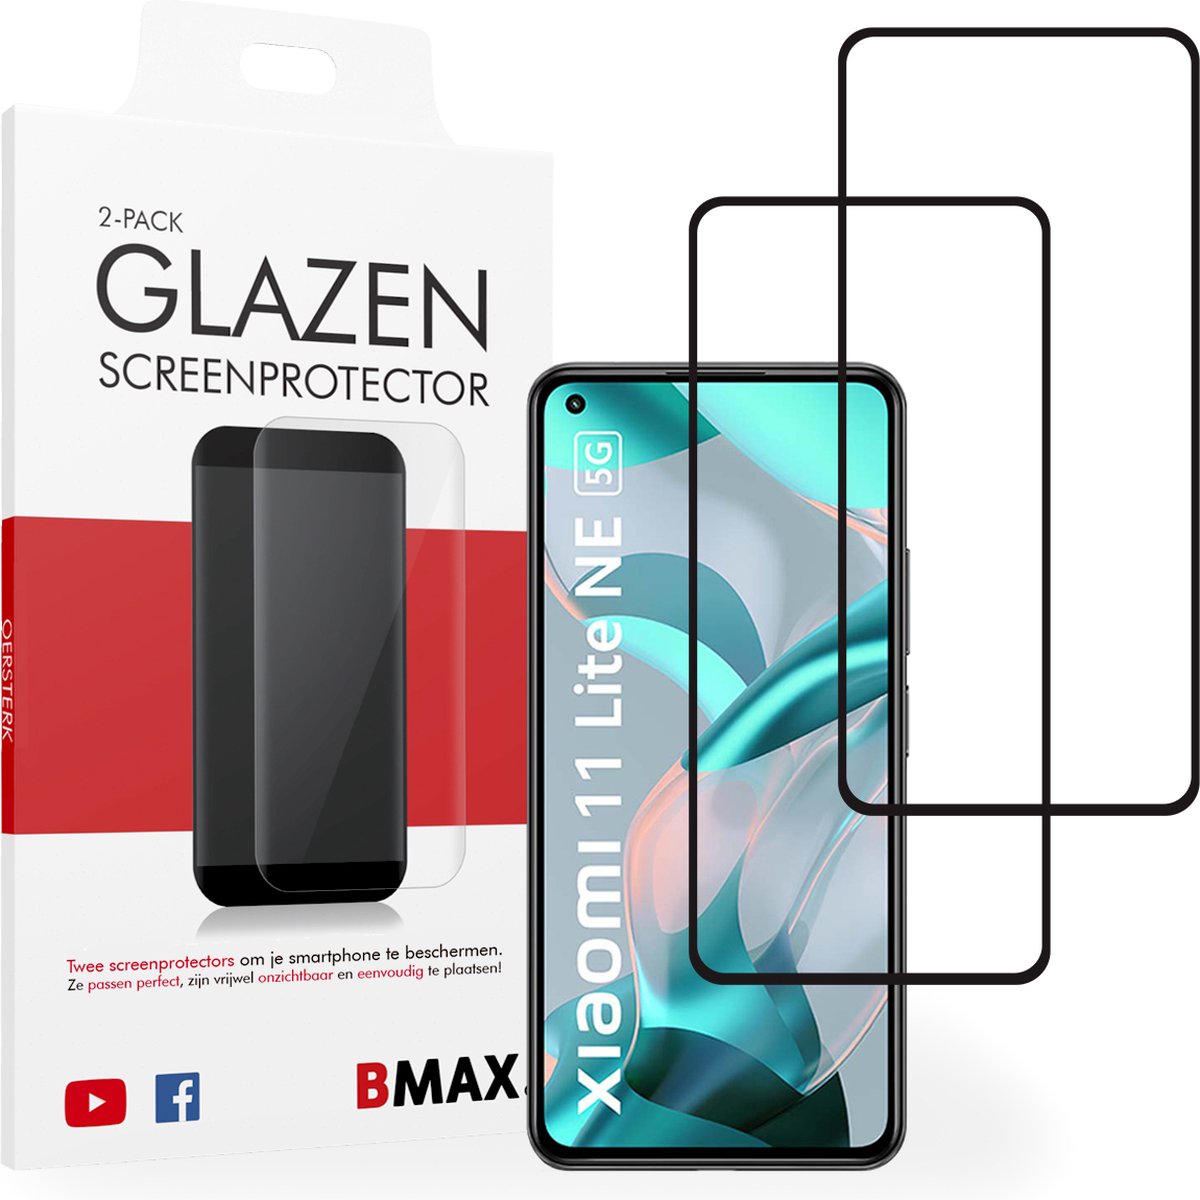 2-pack BMAX Xiaomi 11 Lite 5G NE Screenprotector glas - Full Cover gehard glas - Tempered glas - Xiaomi screenprotectors 2 stuks - Telefoonglaasje - Beschermglas - Glasplaatje - Screensaver - Screen protector - Case friendly - Zwart